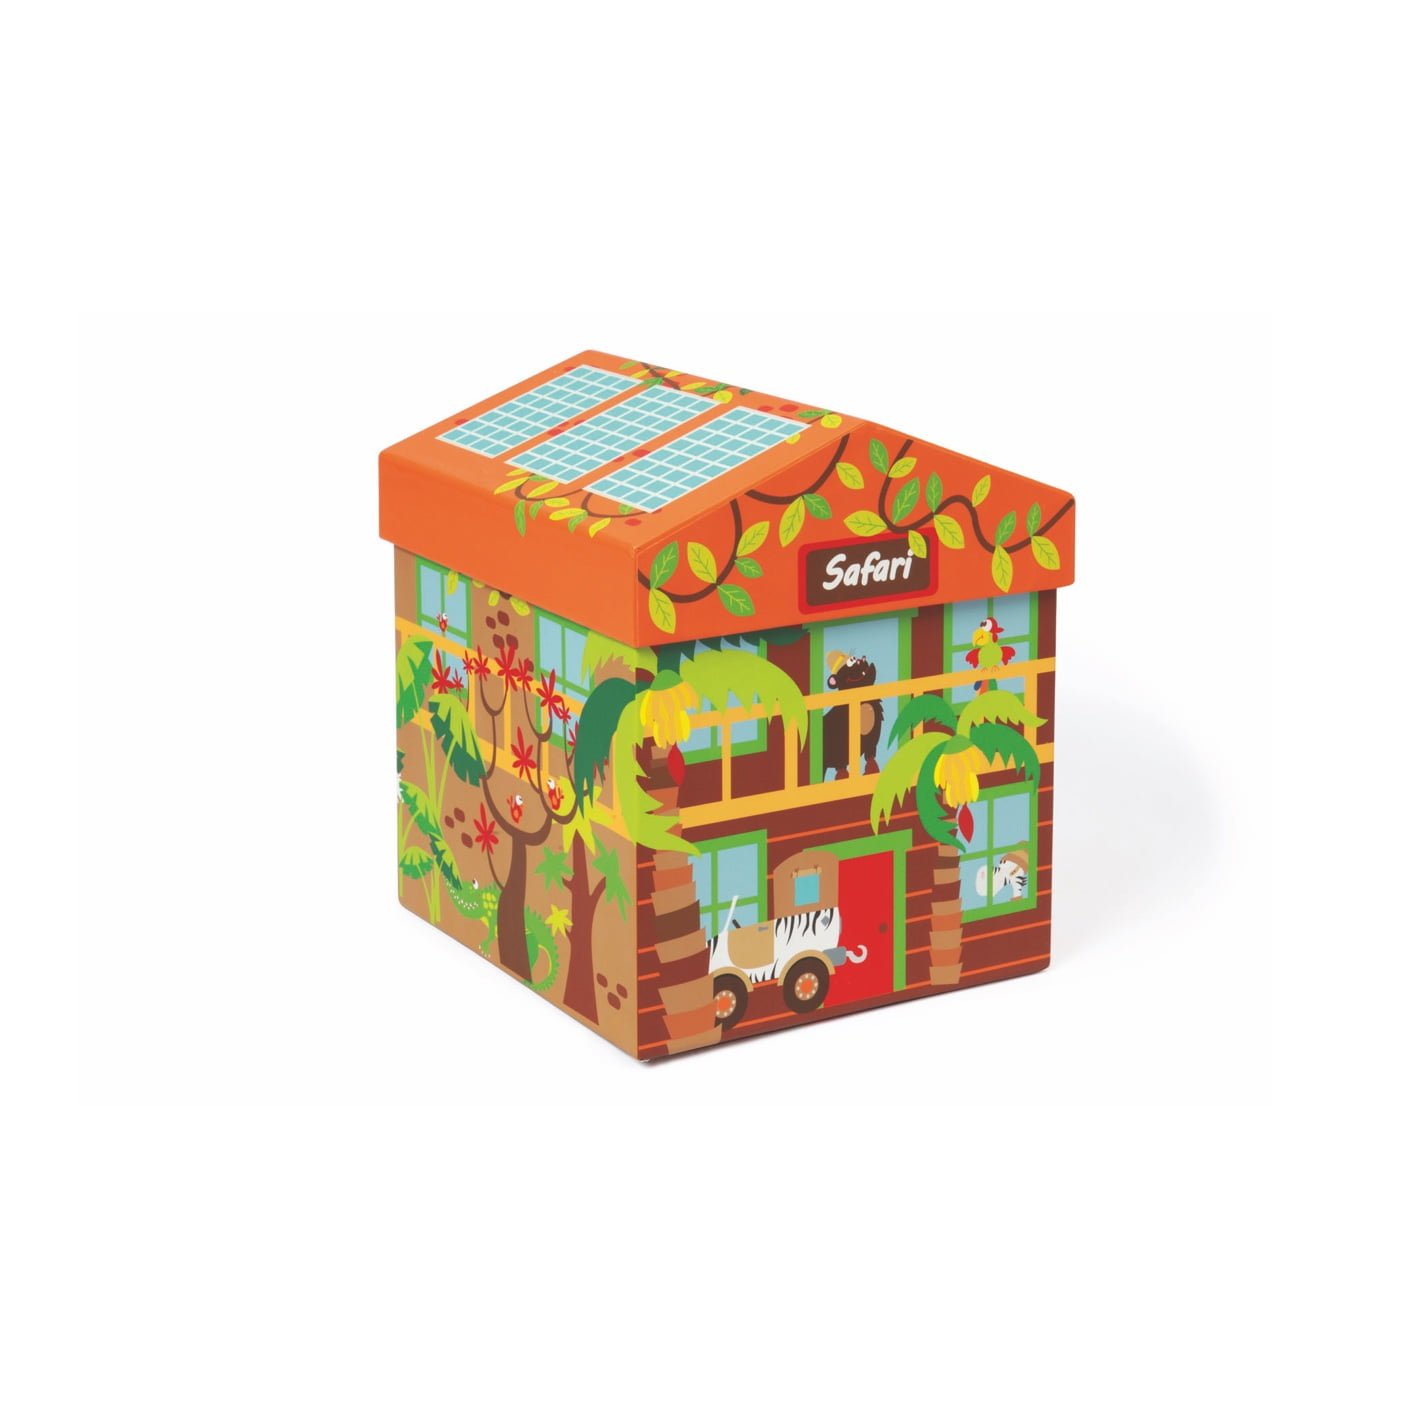 Scratch Play box - Safari